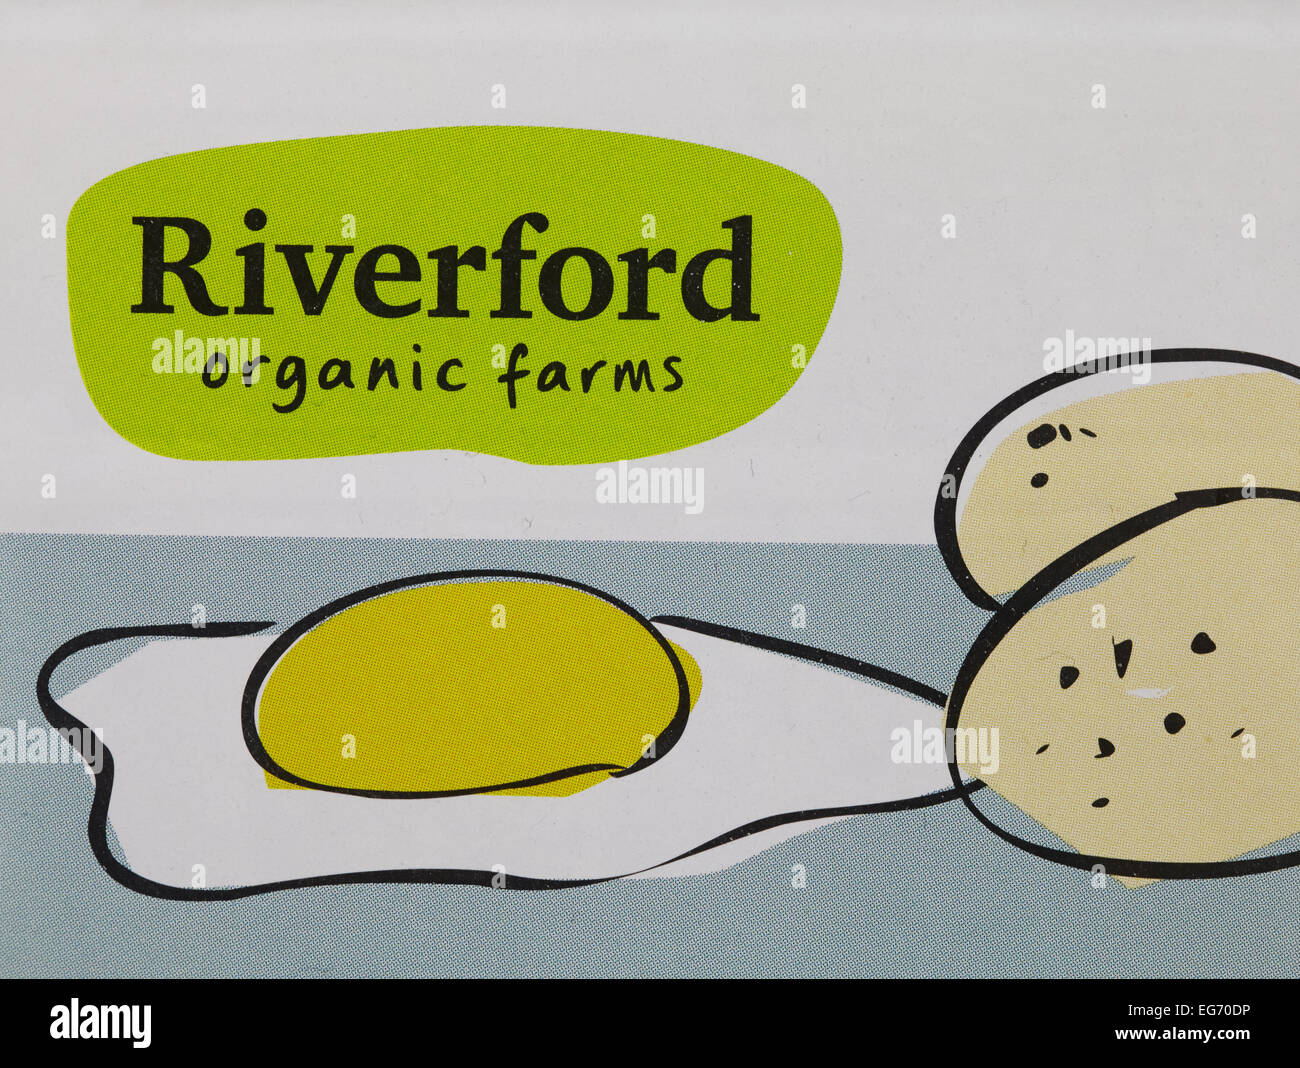 Riverford organic food Stock Photo